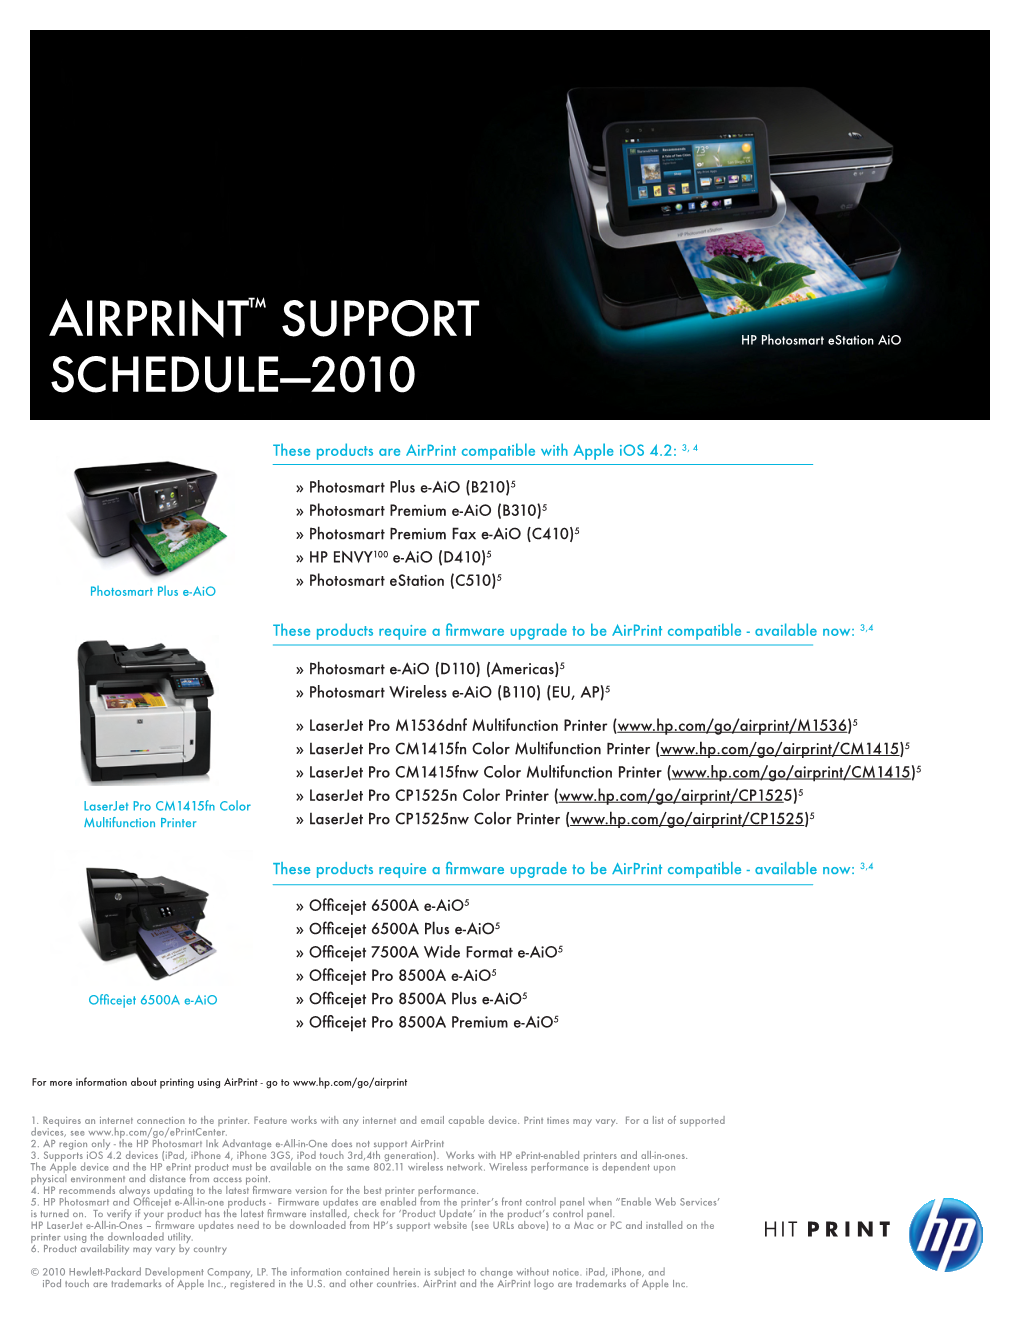 Airprint™ Support Schedule-2010